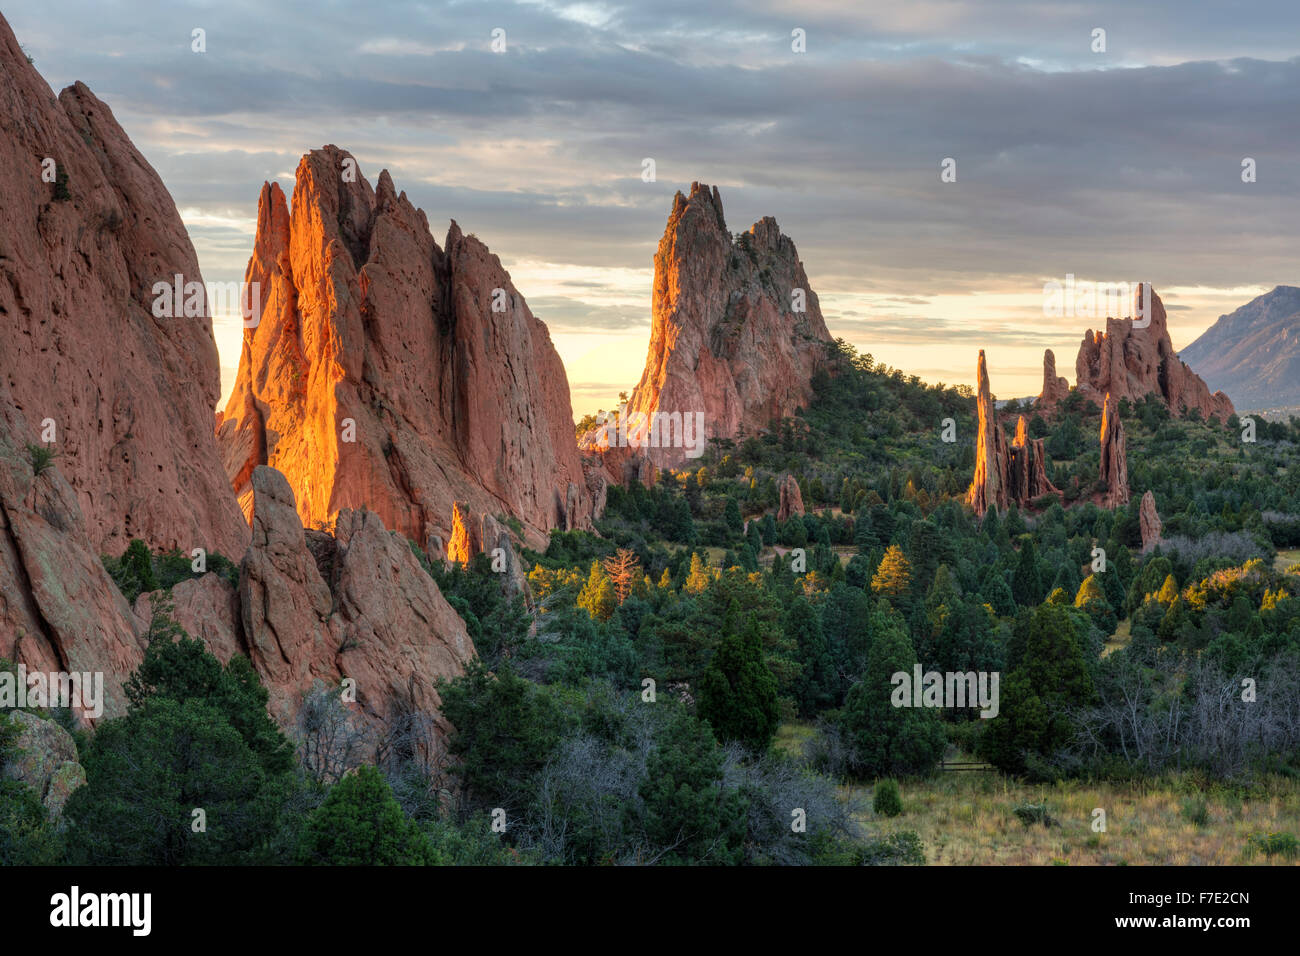 Sonnenaufgang am roten Felsen Formationen im Garten der Götter in Colorado Springs, Colorado Stockfoto